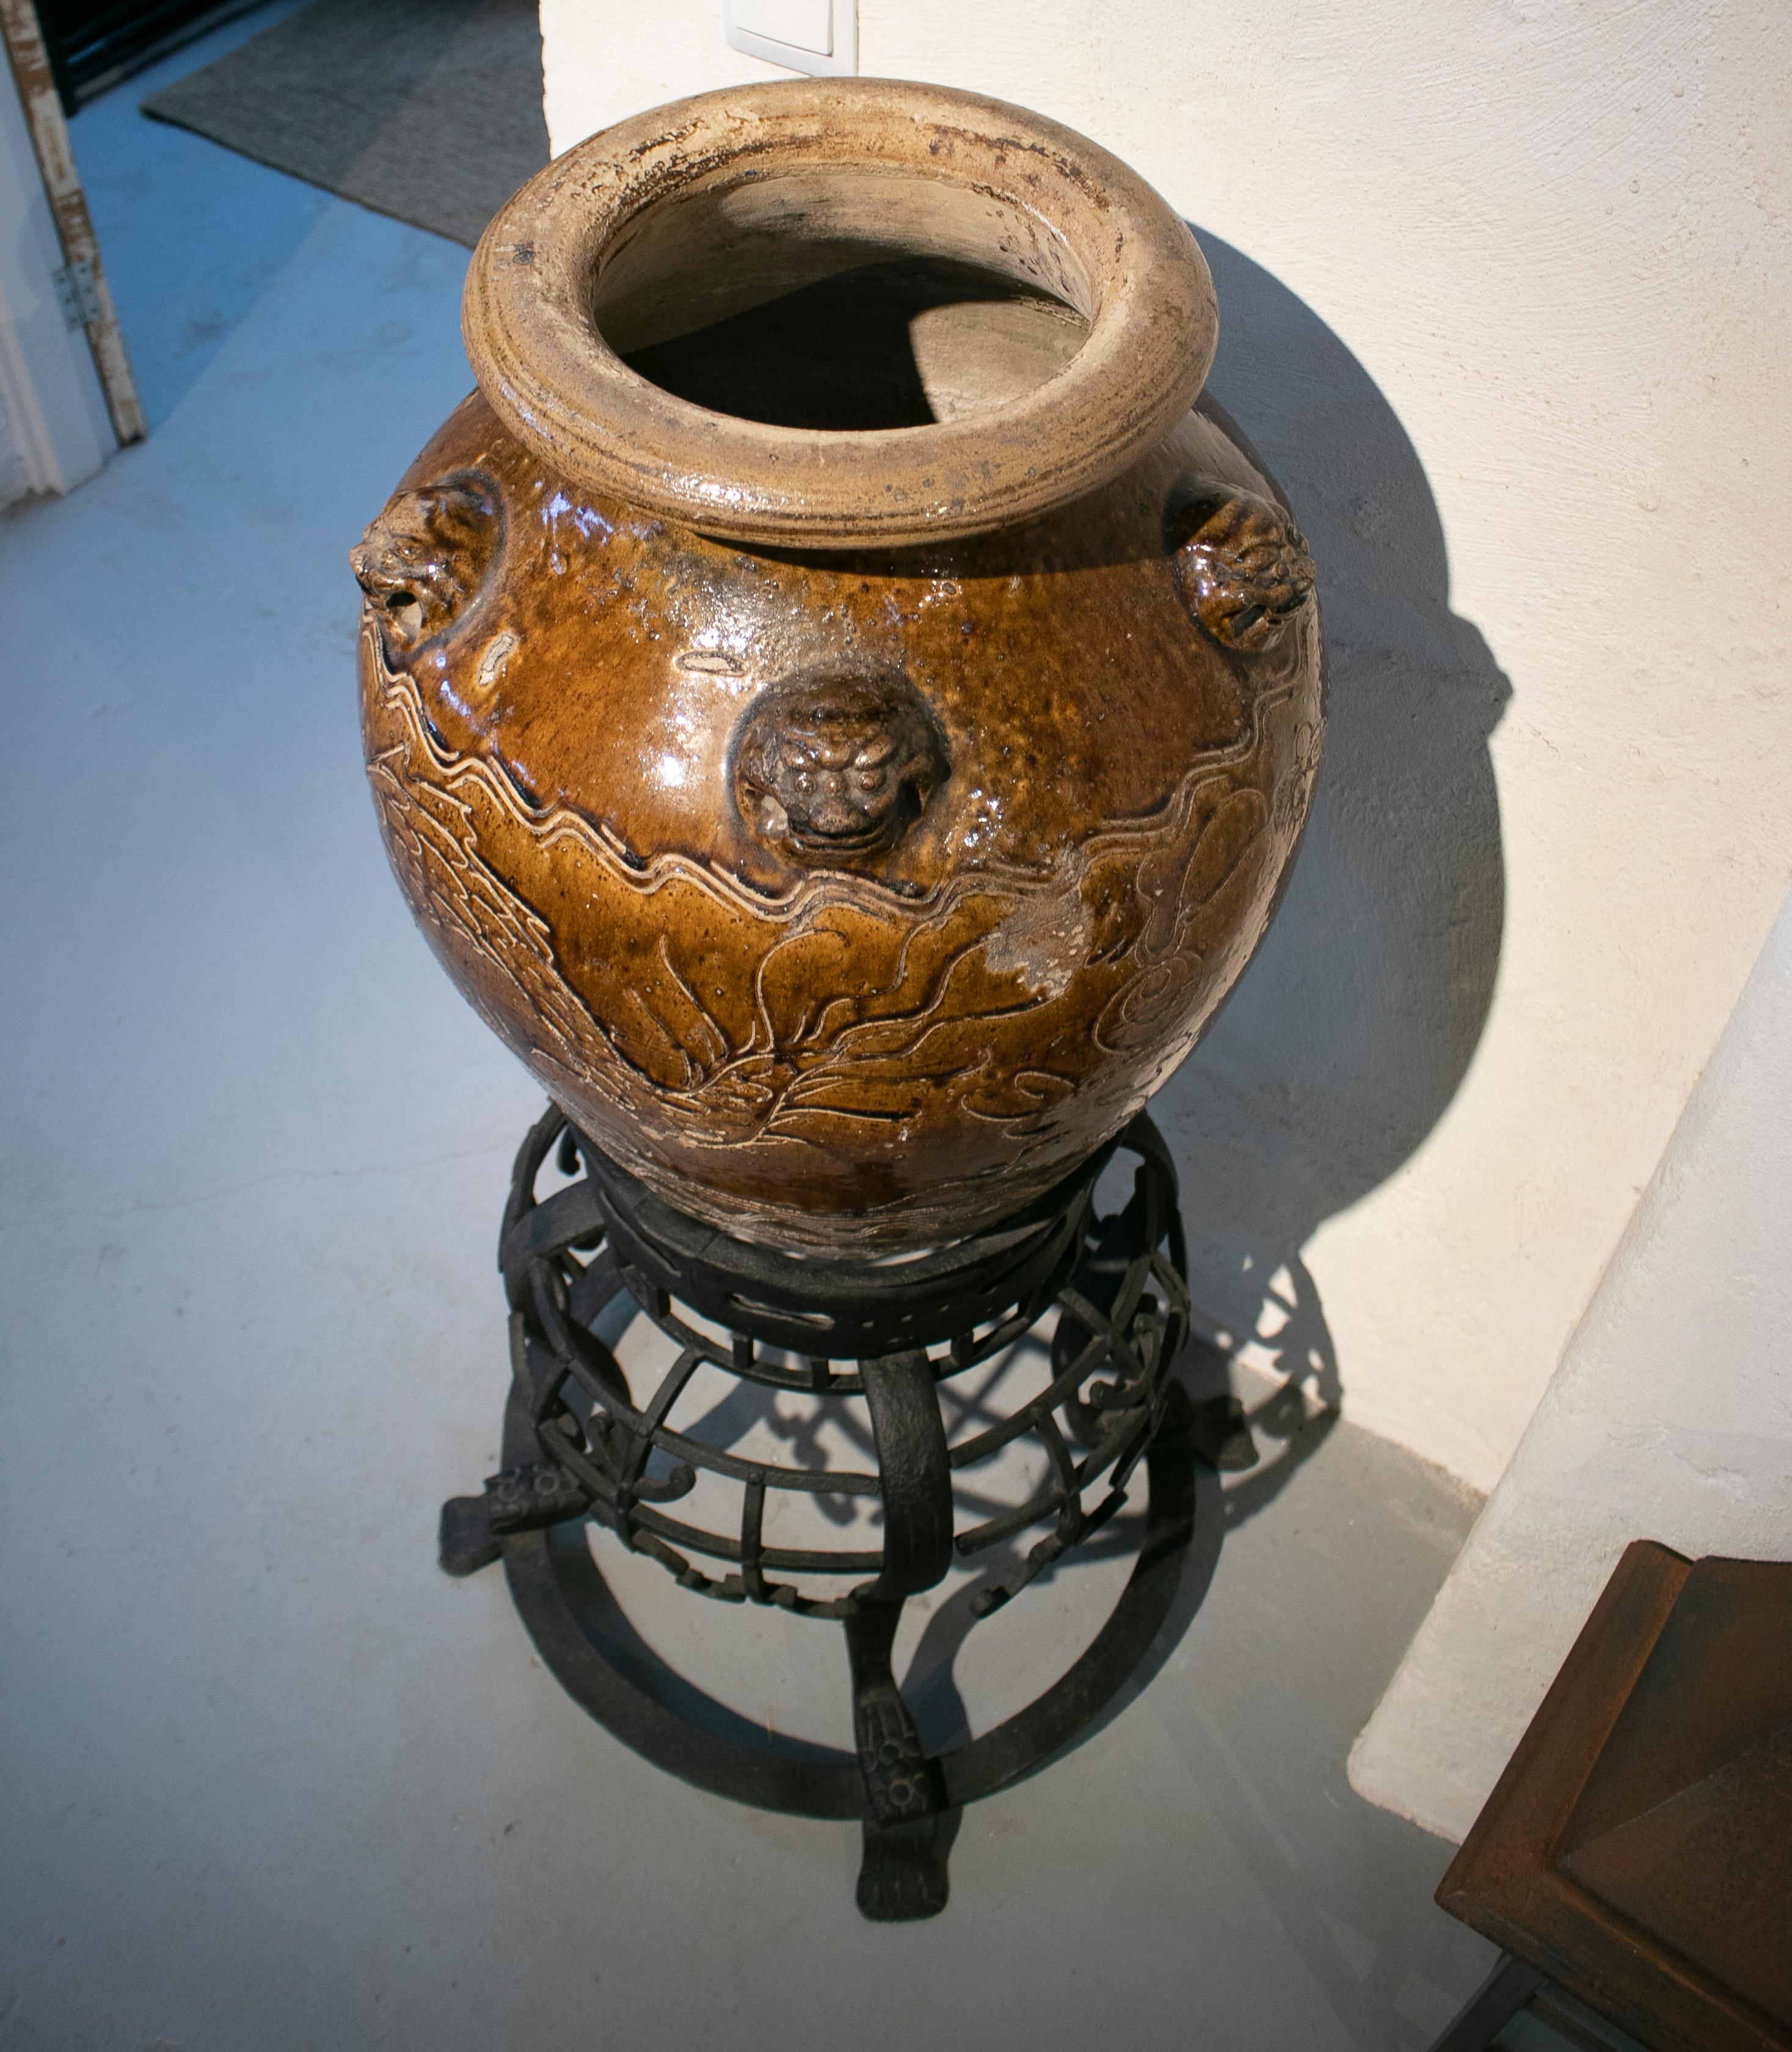 20th Century 1920s Large Chinese Glazed Ceramic Vase with Wrought Iron Base Stand